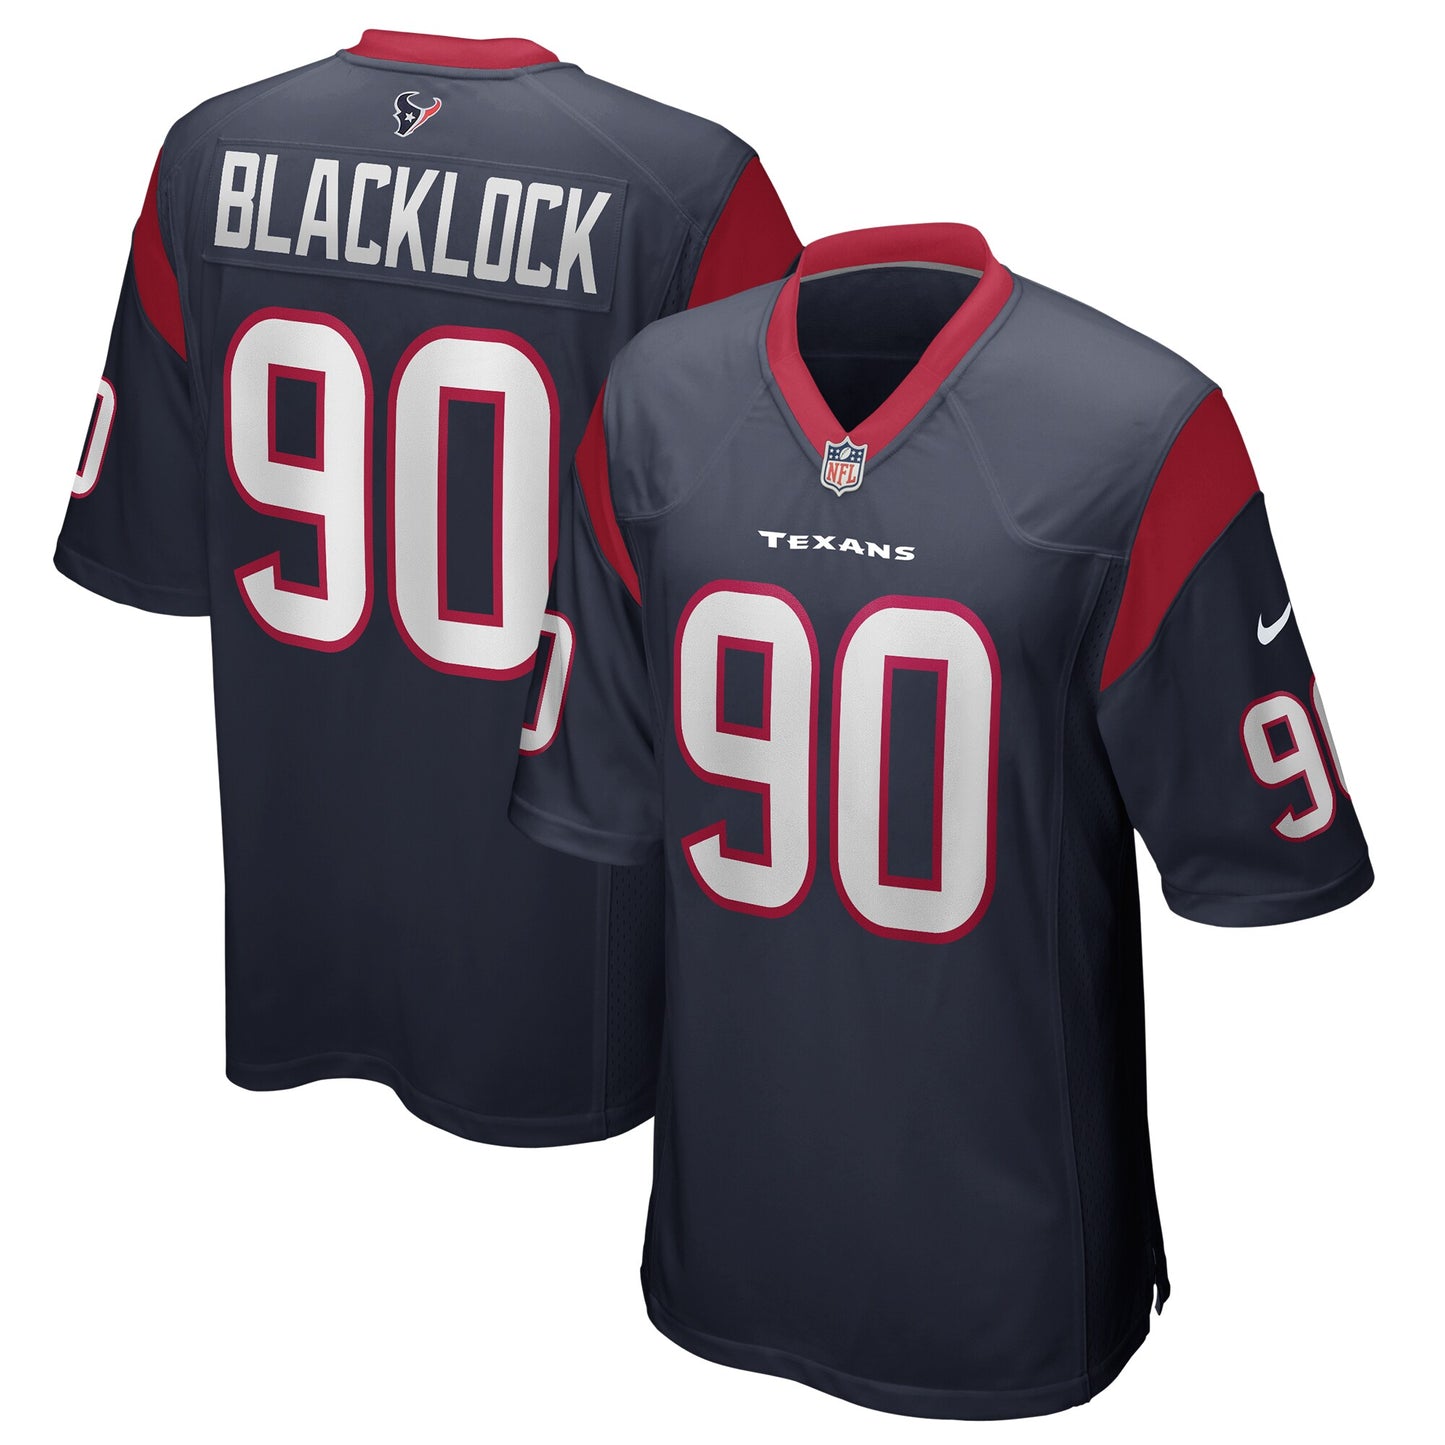 Ross Blacklock Houston Texans Nike Player Game Jersey - Navy